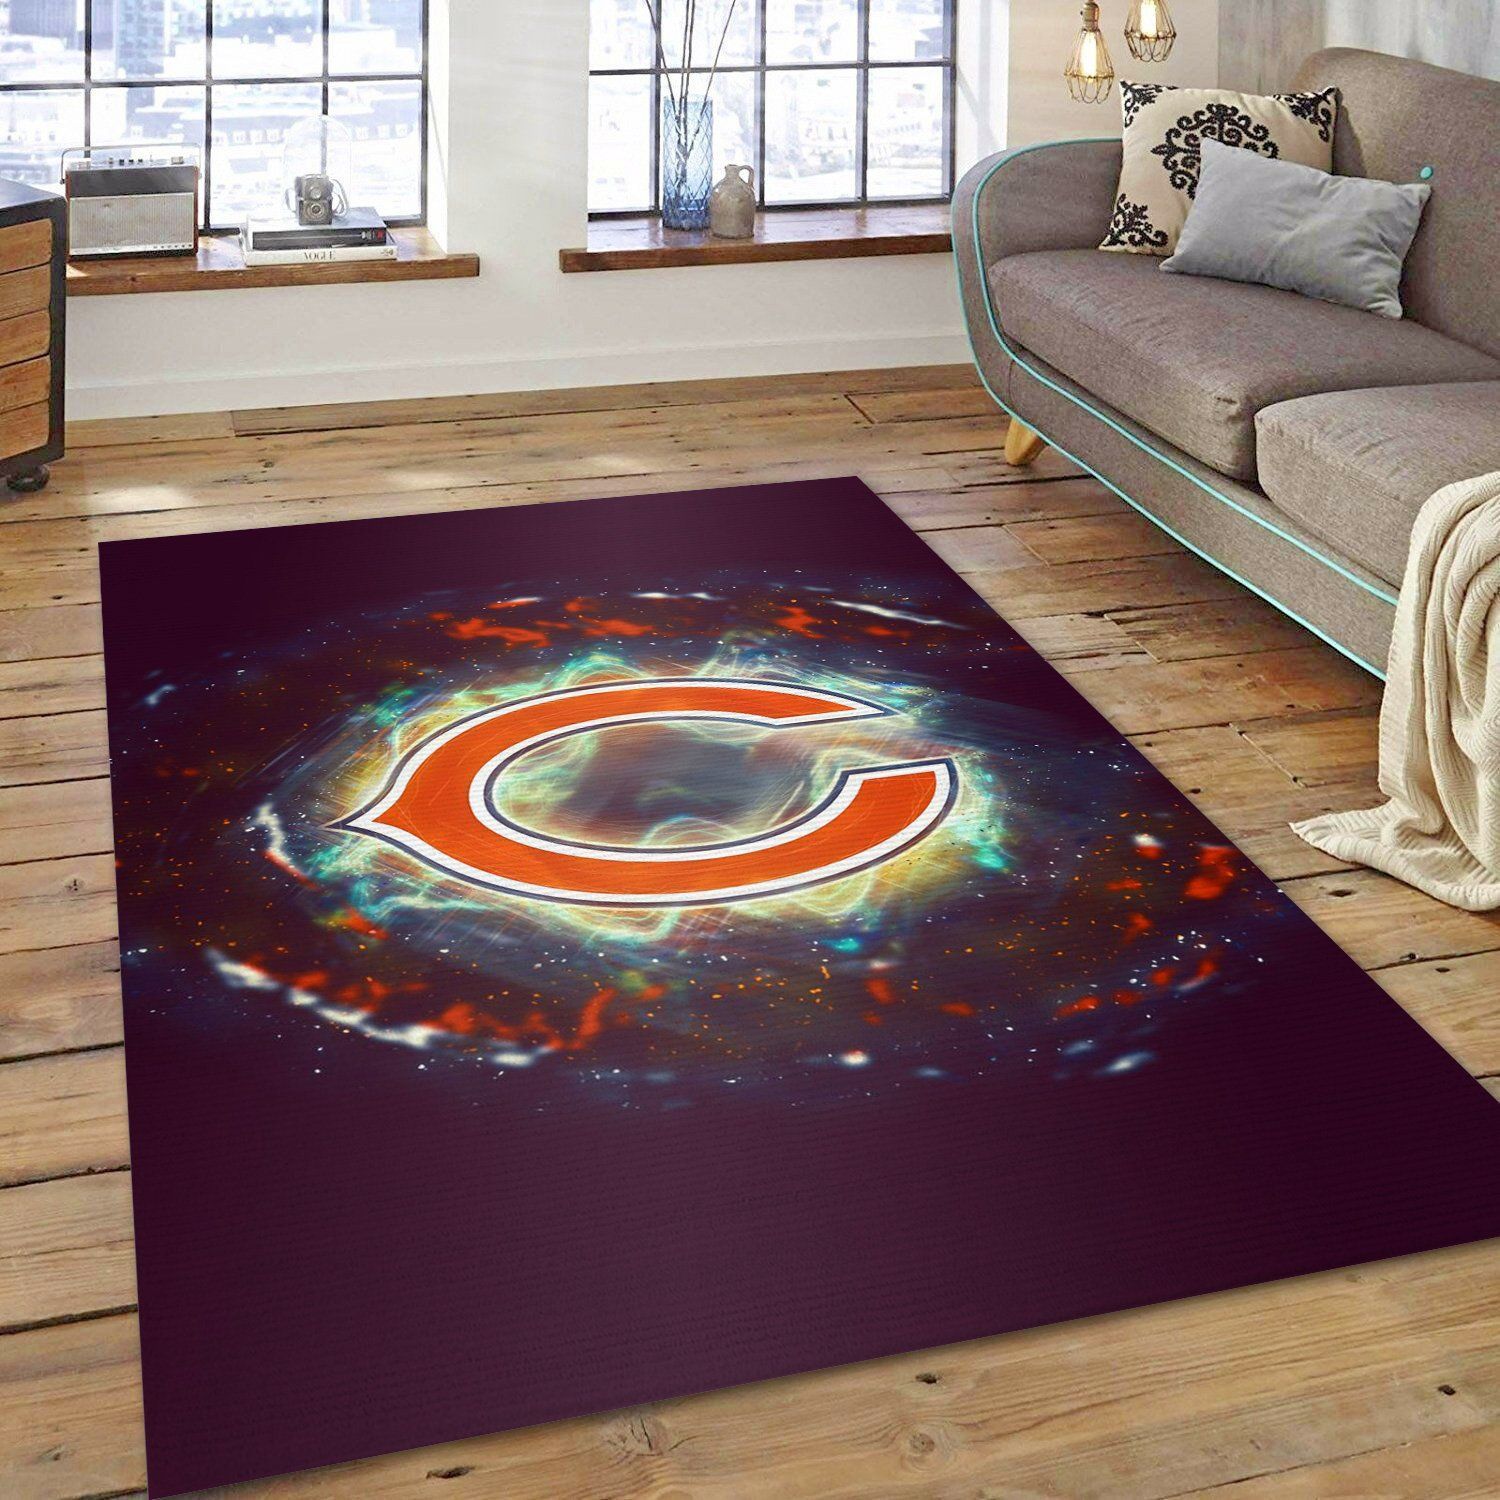 Chicago Bears Nfl Team Floor home decoration carpet rug